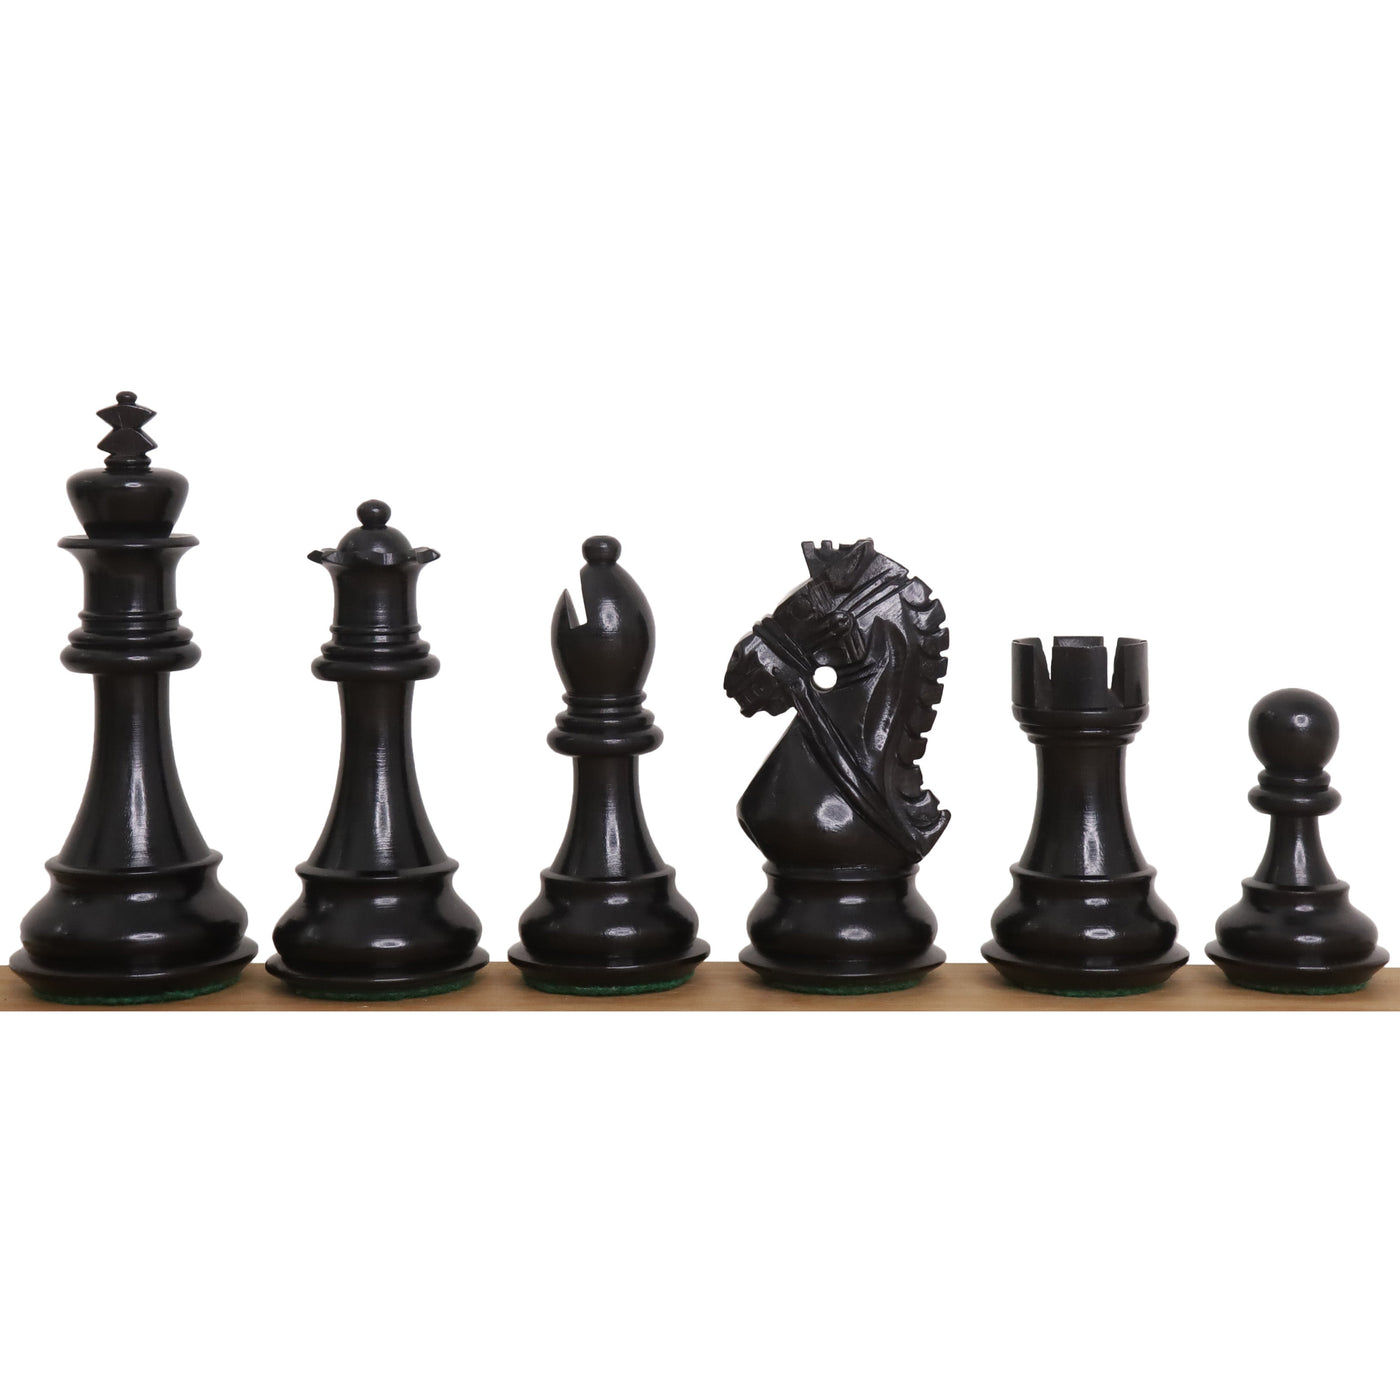 4" Bridle Staunton Luxury Chess Set - Chess Pieces Only - Ebony Wood & Boxwood